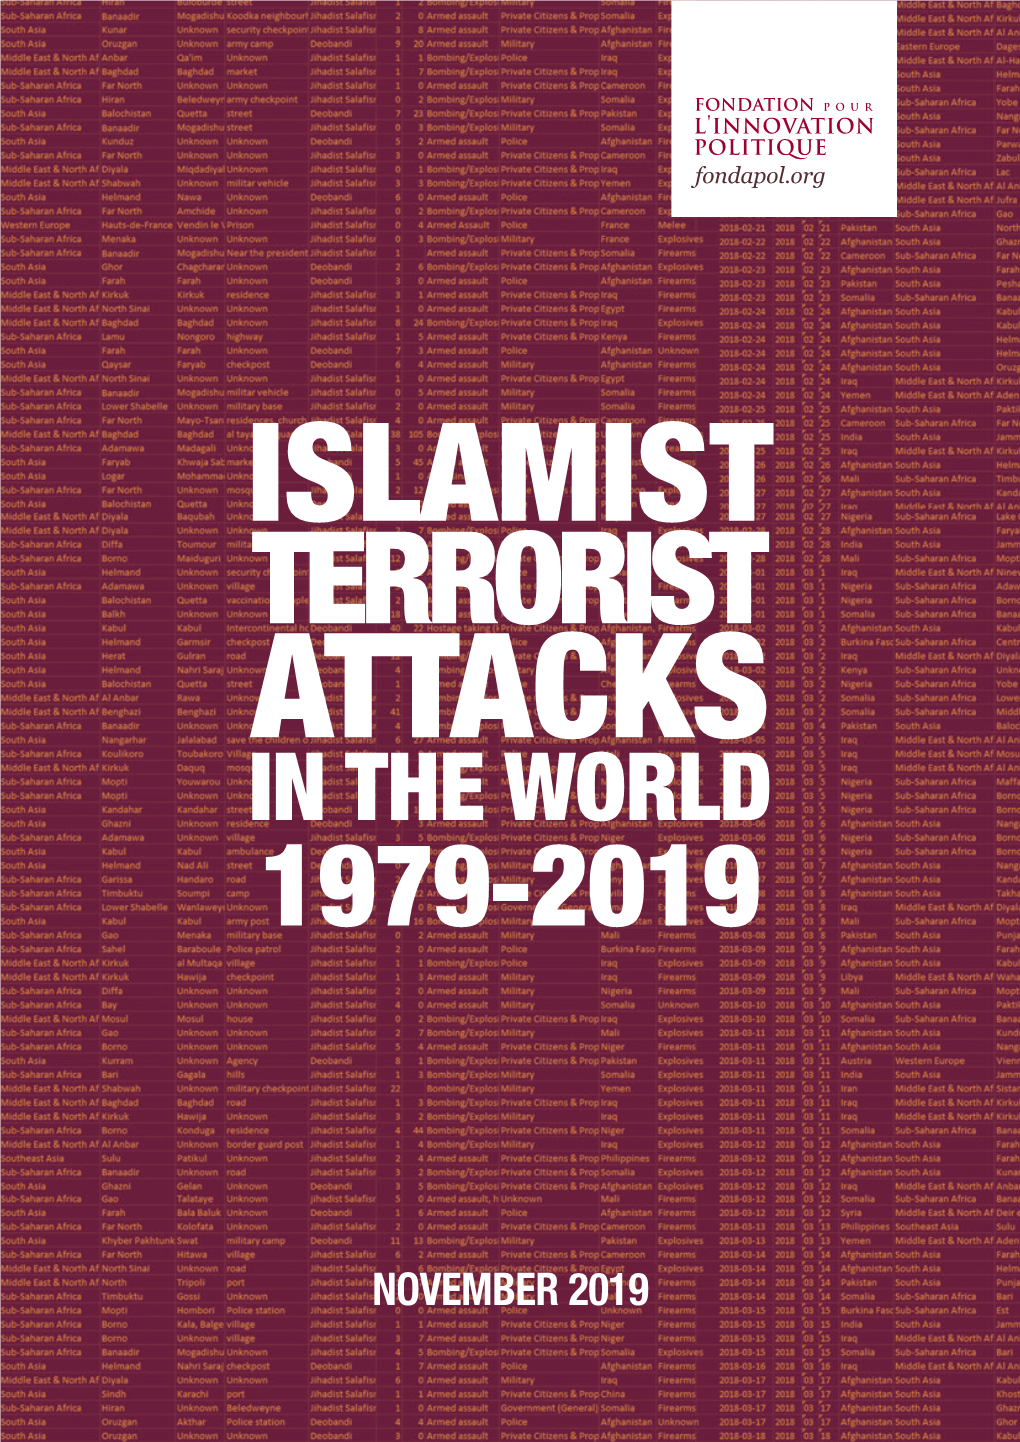 Of Islamist Terrorist Attacks